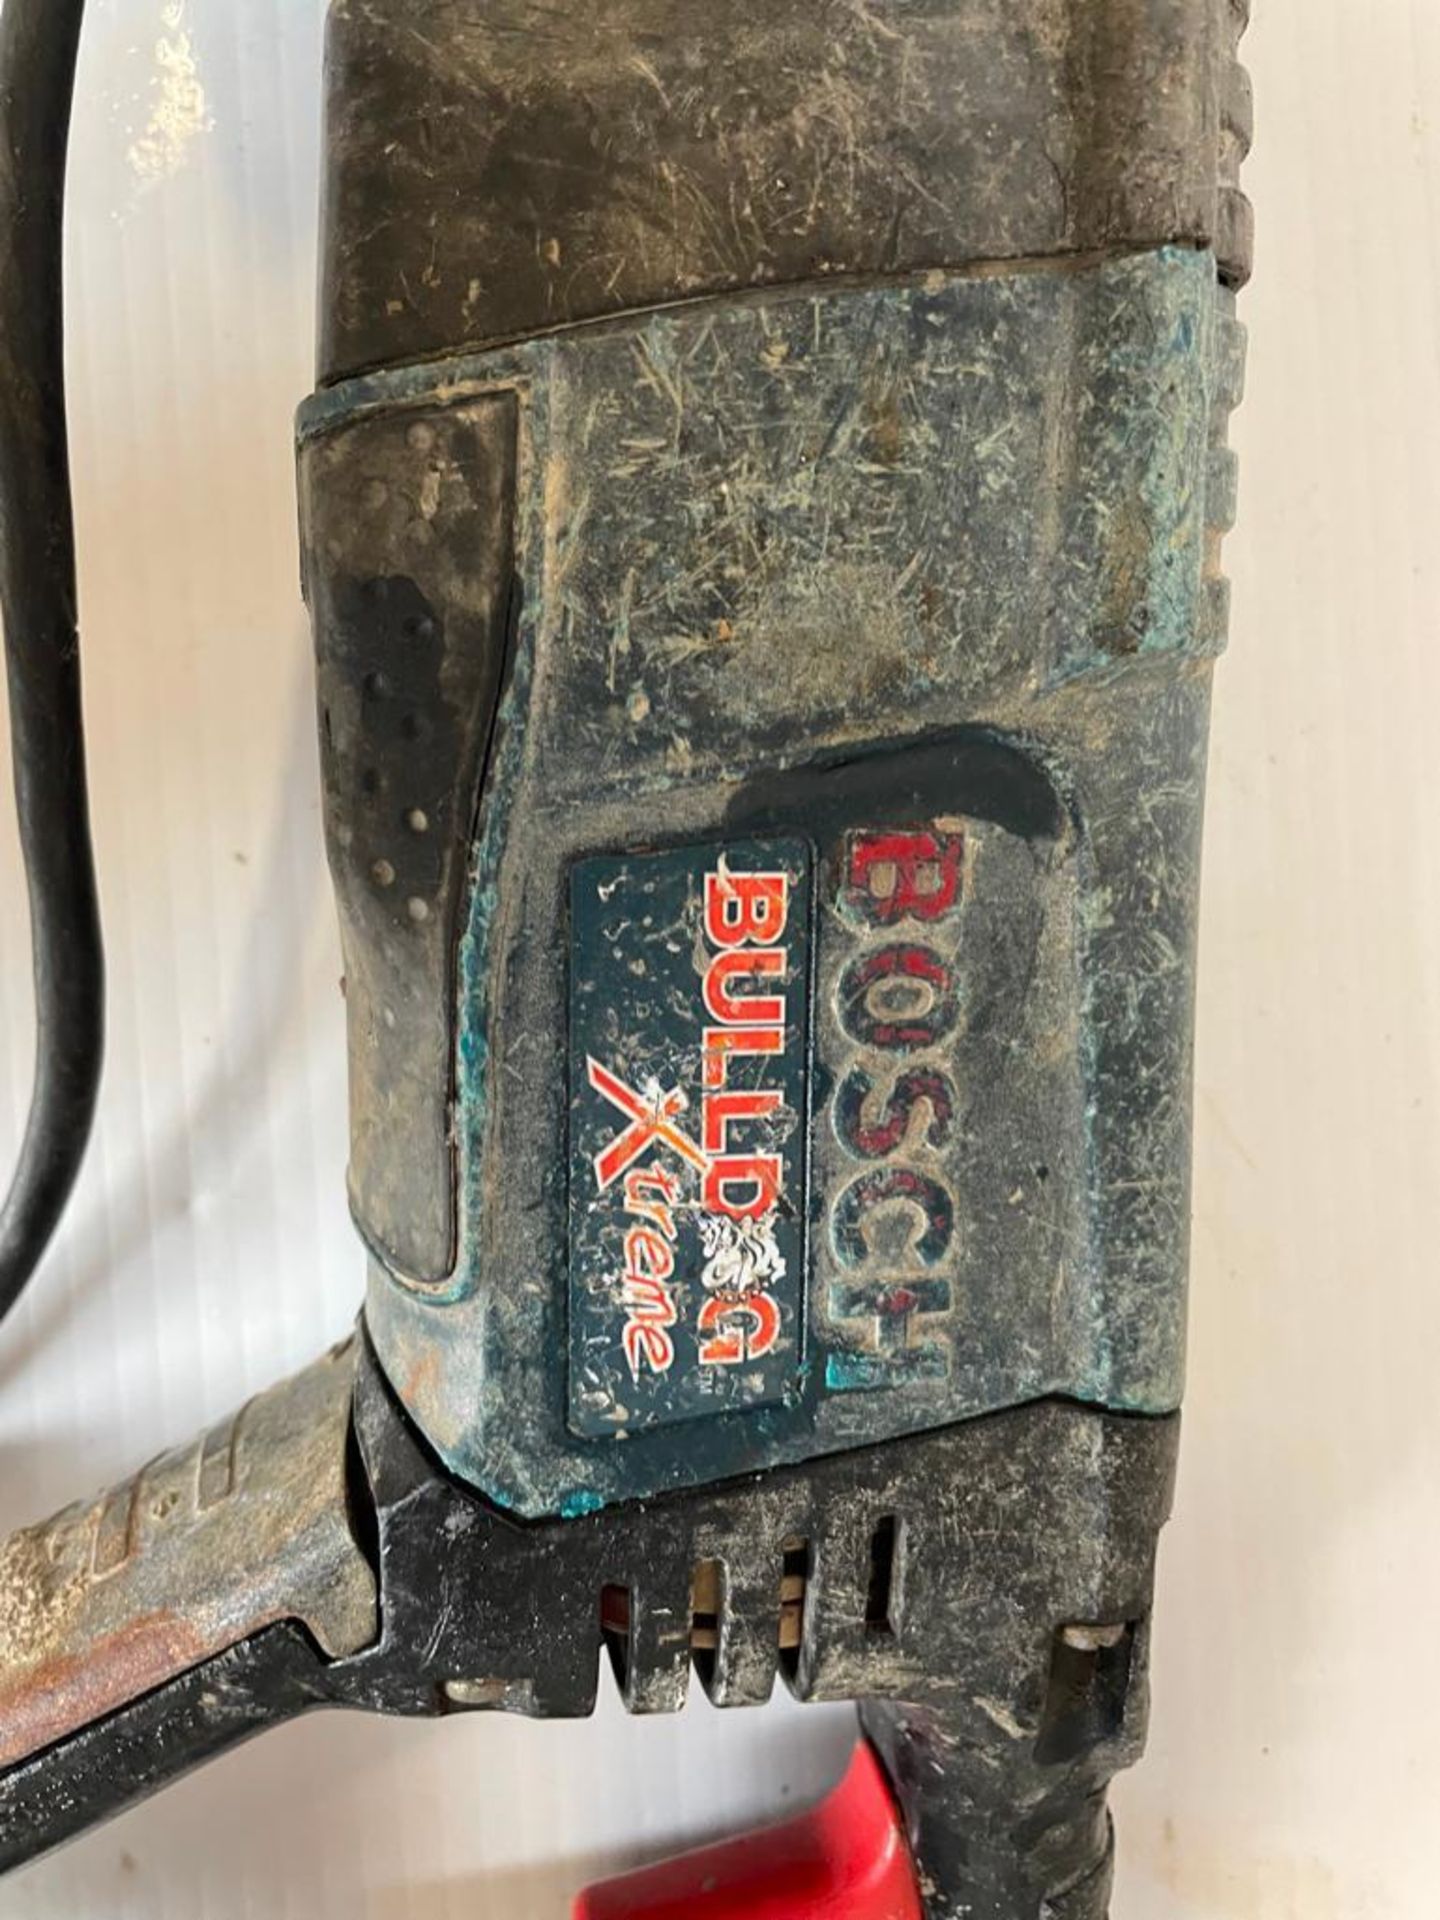 Bosch 11255VSR Bulldog Xtreme Hammer Drill, 120V. Located in Hazelwood, MO - Image 2 of 4